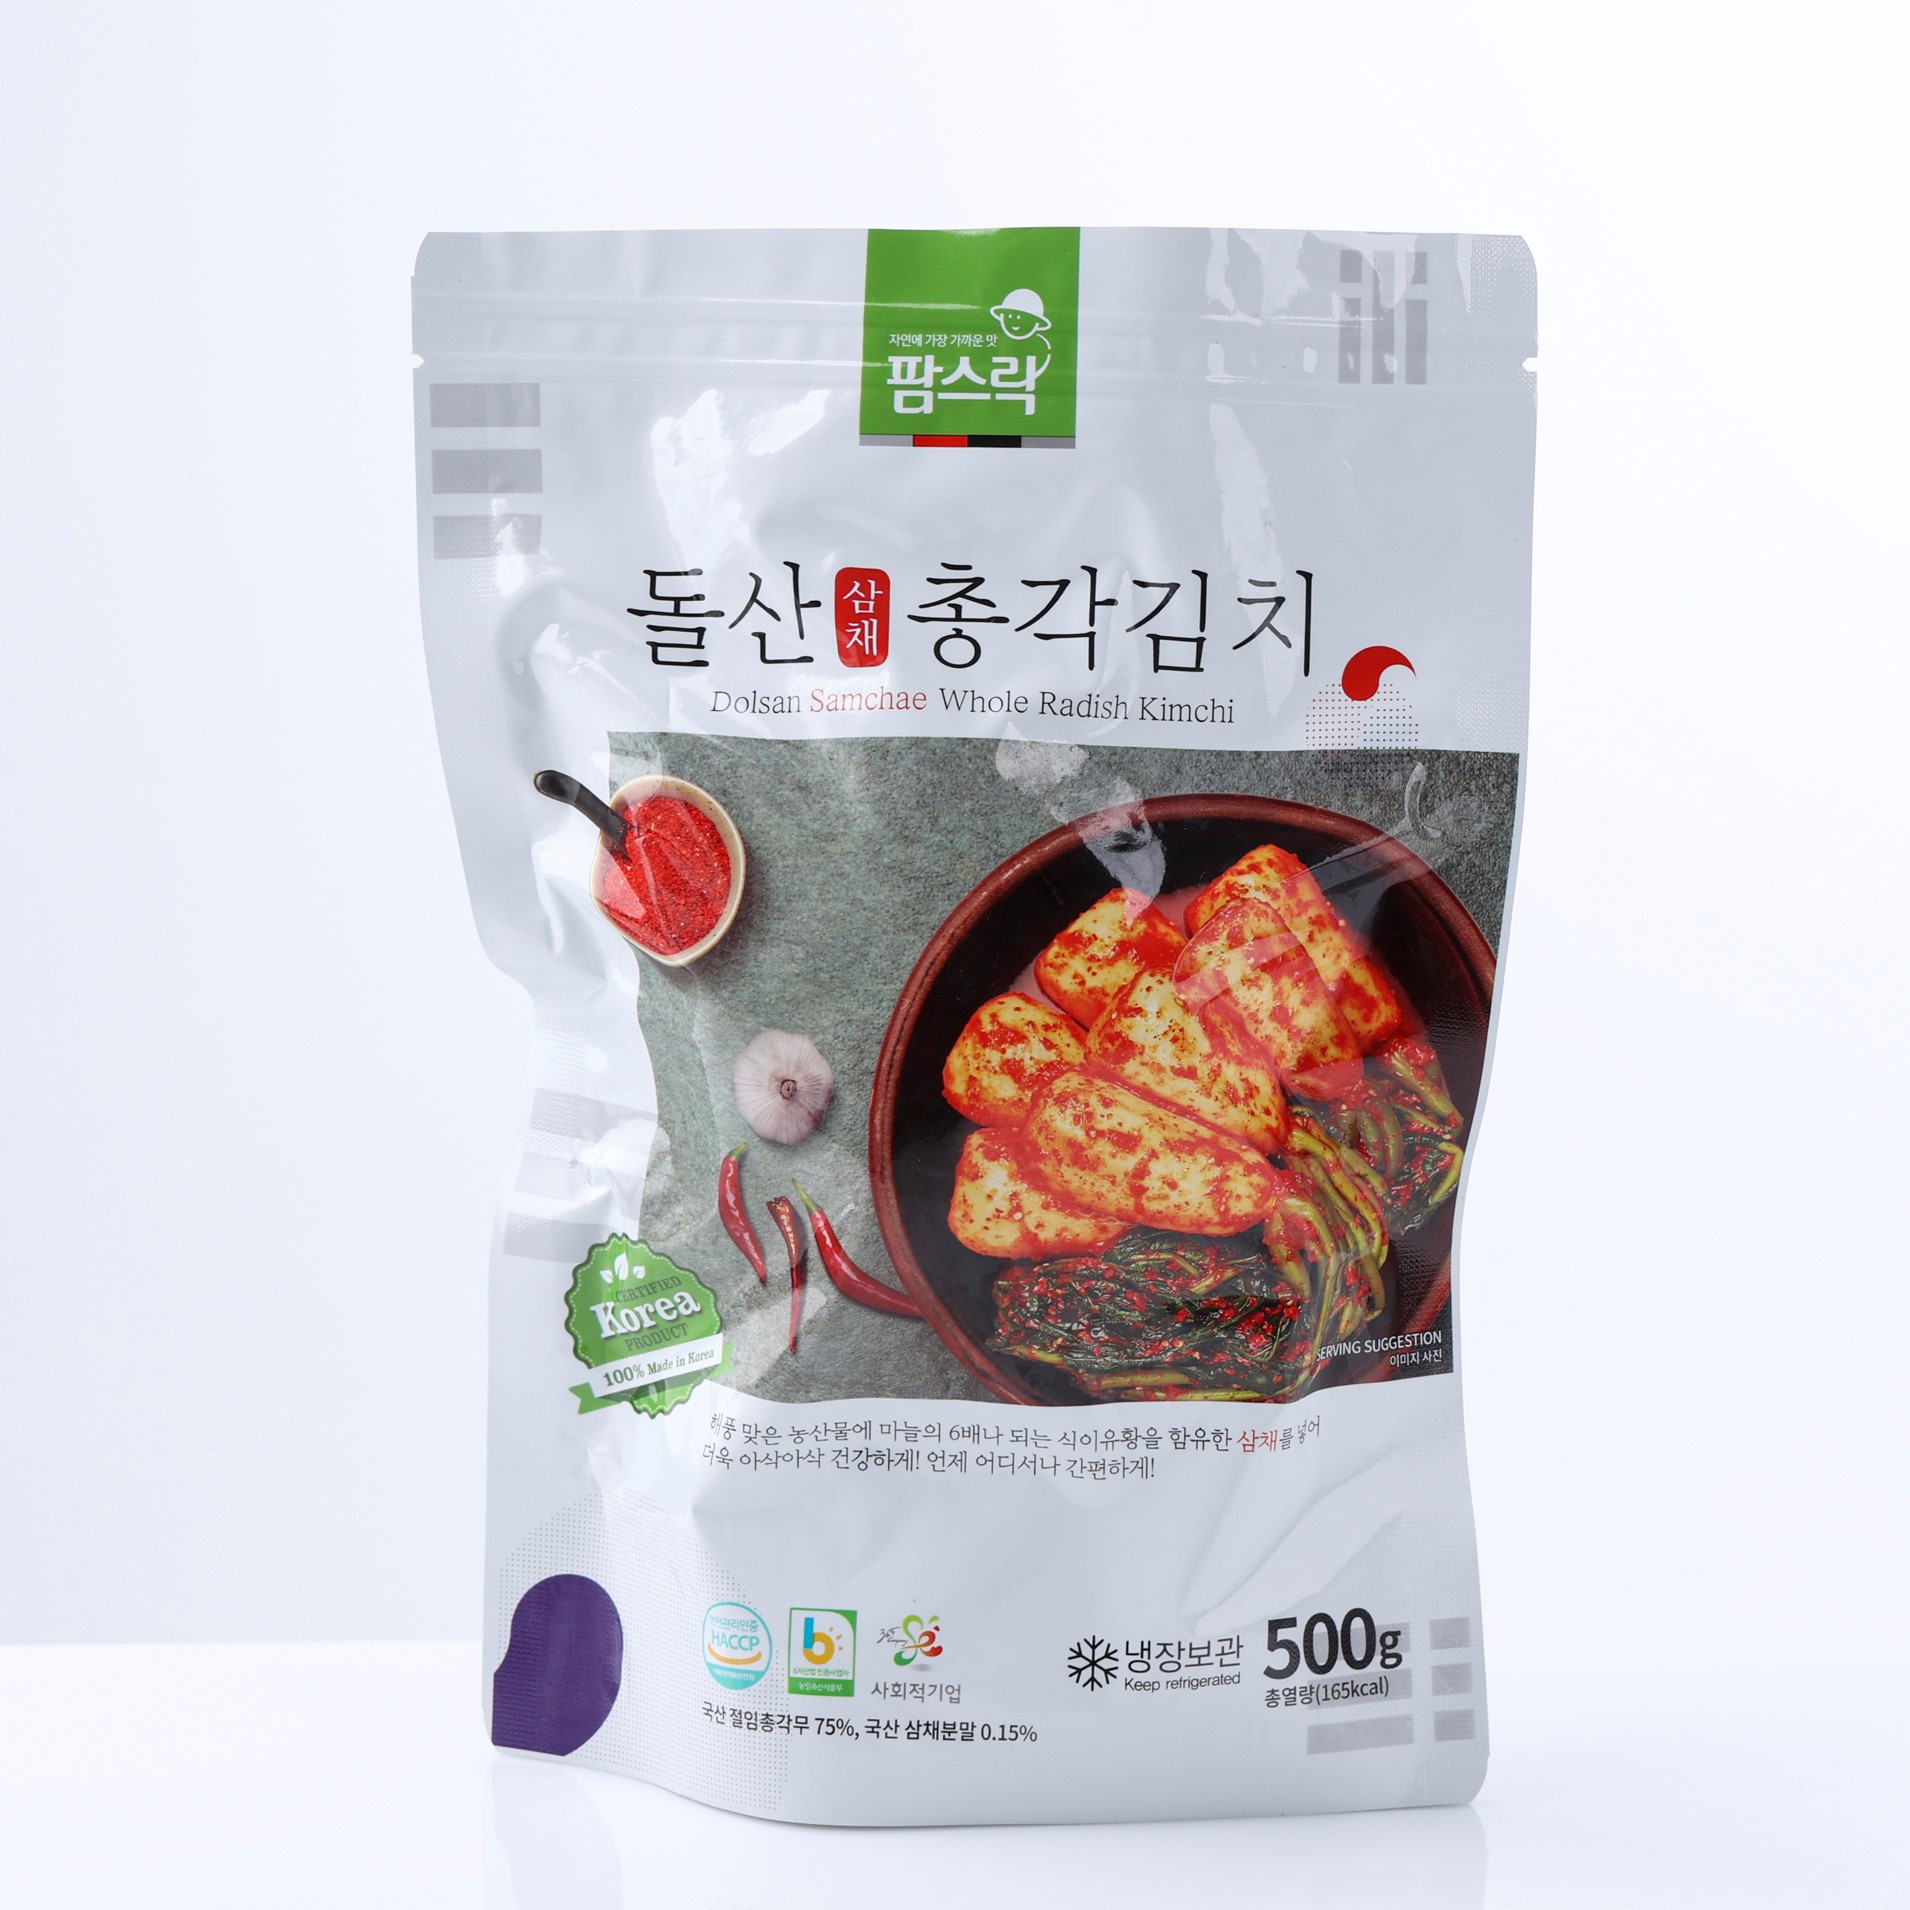 Dolsan Samchae Whole Radish Kimchi